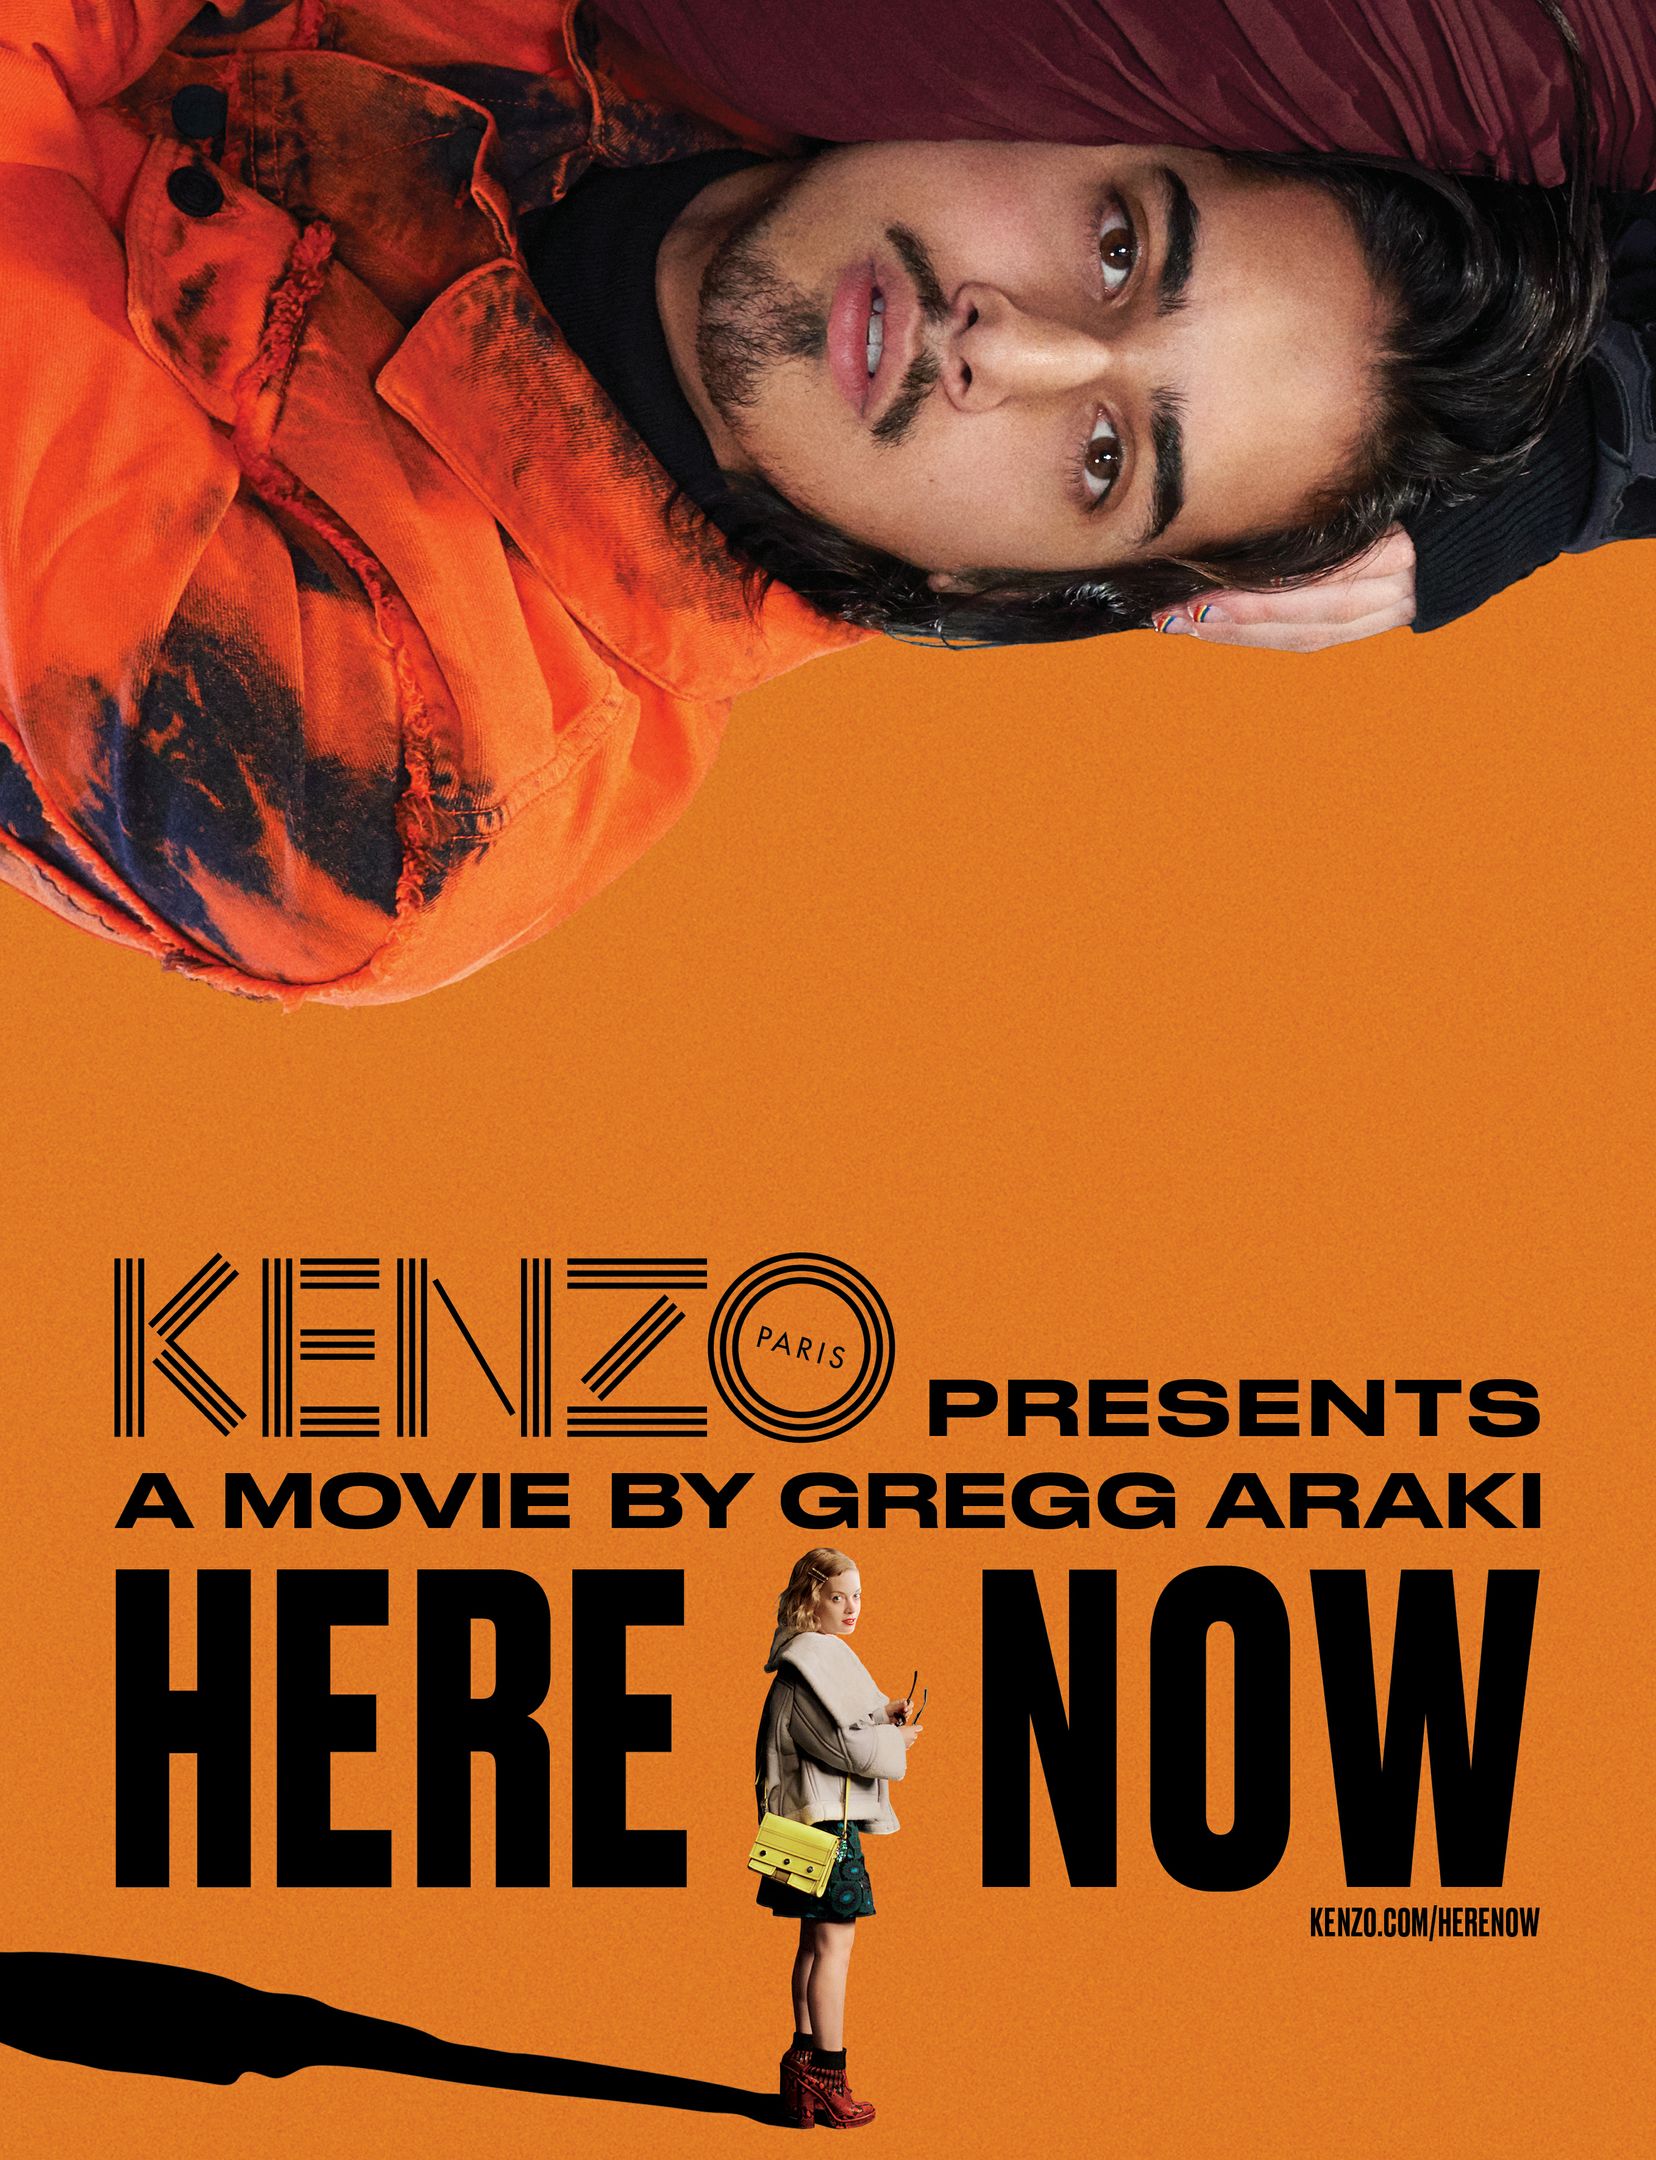 KENZO Presents “Here Now” Movie By Gregg Araki